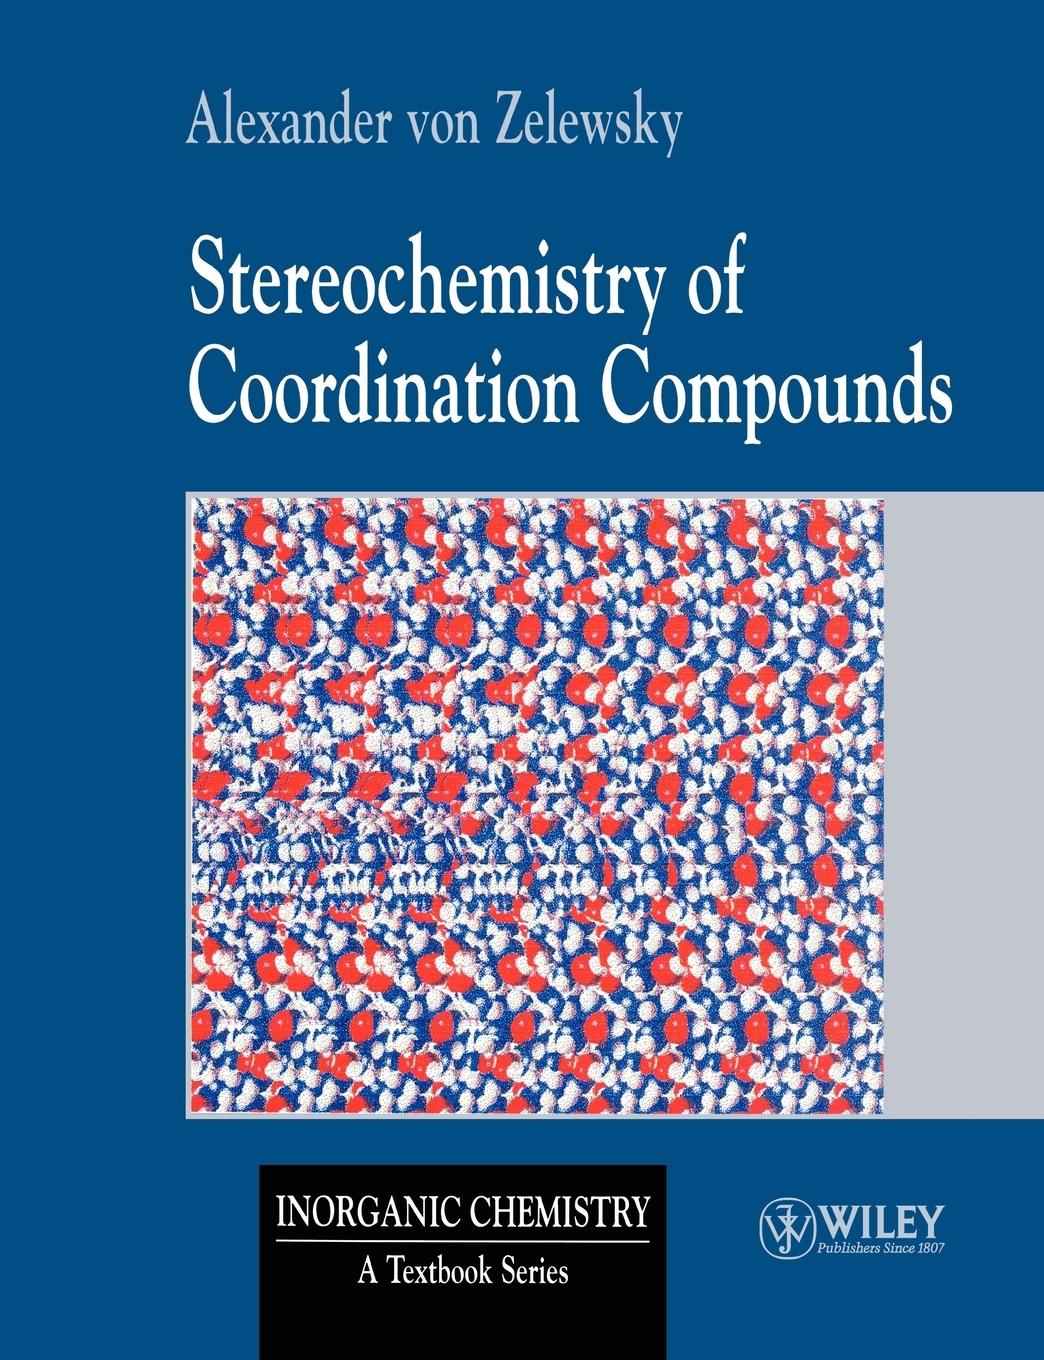 Steroechemistry of Coordination Compounds - Alexander von Zelewsky